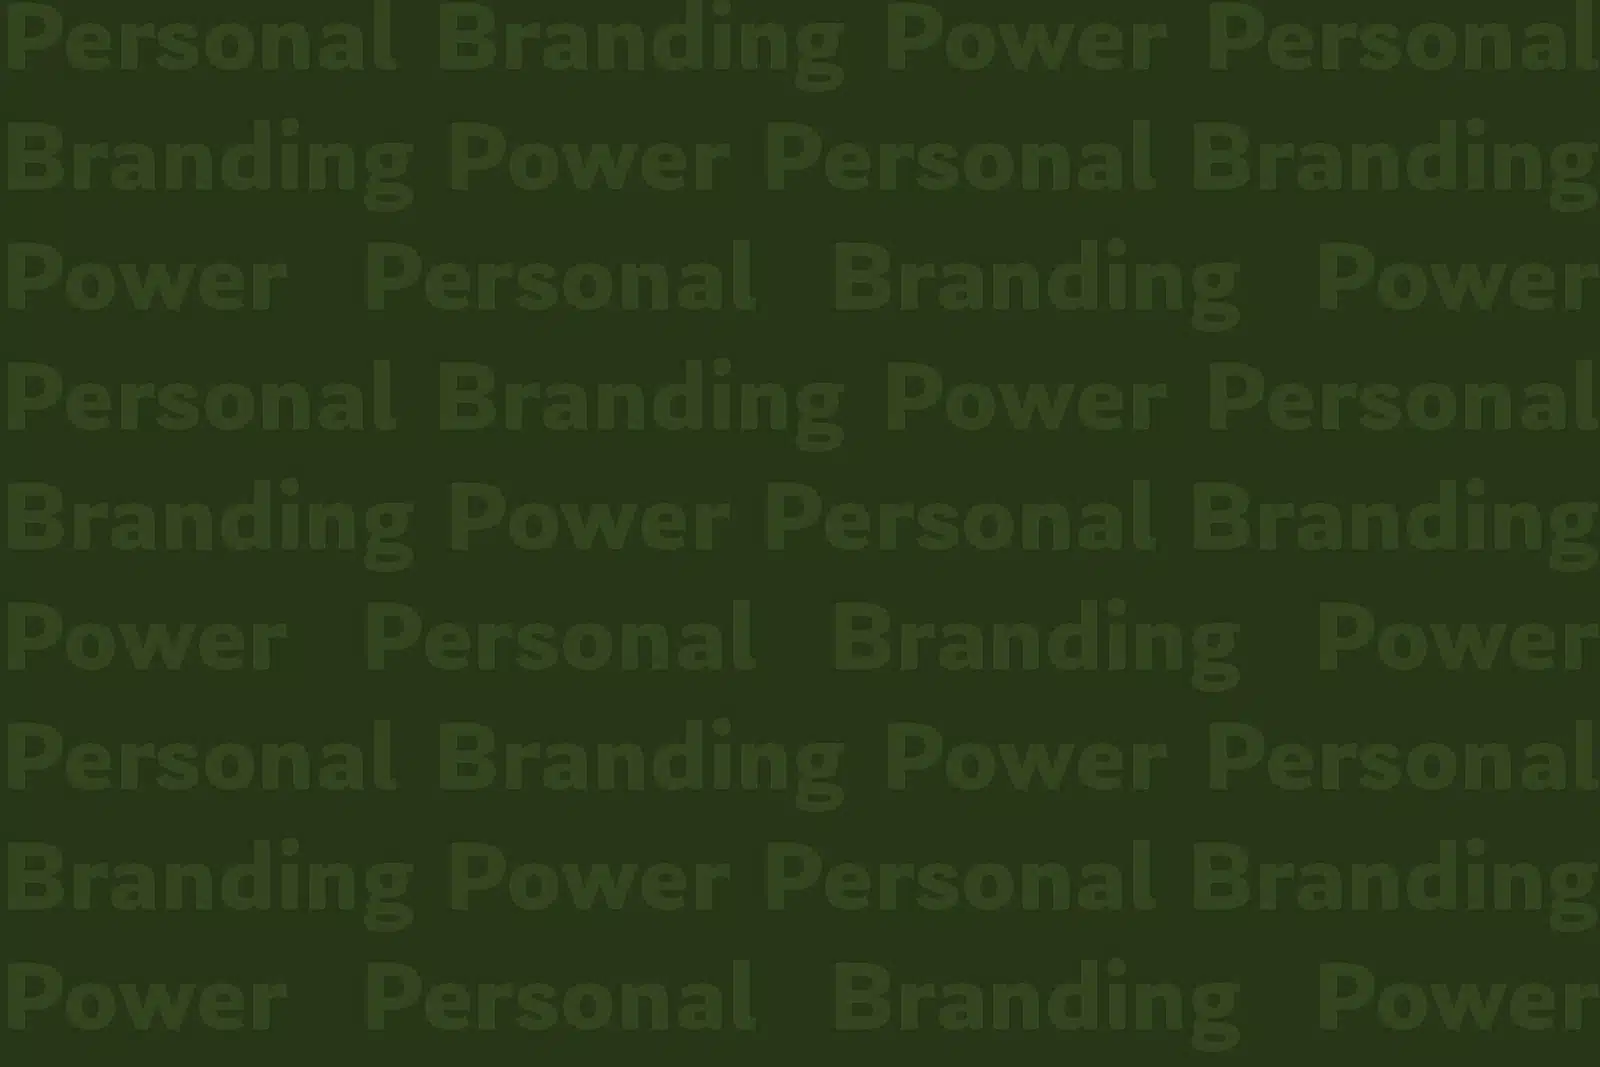 grüne Farbfläche mit Text Personal Branding Power